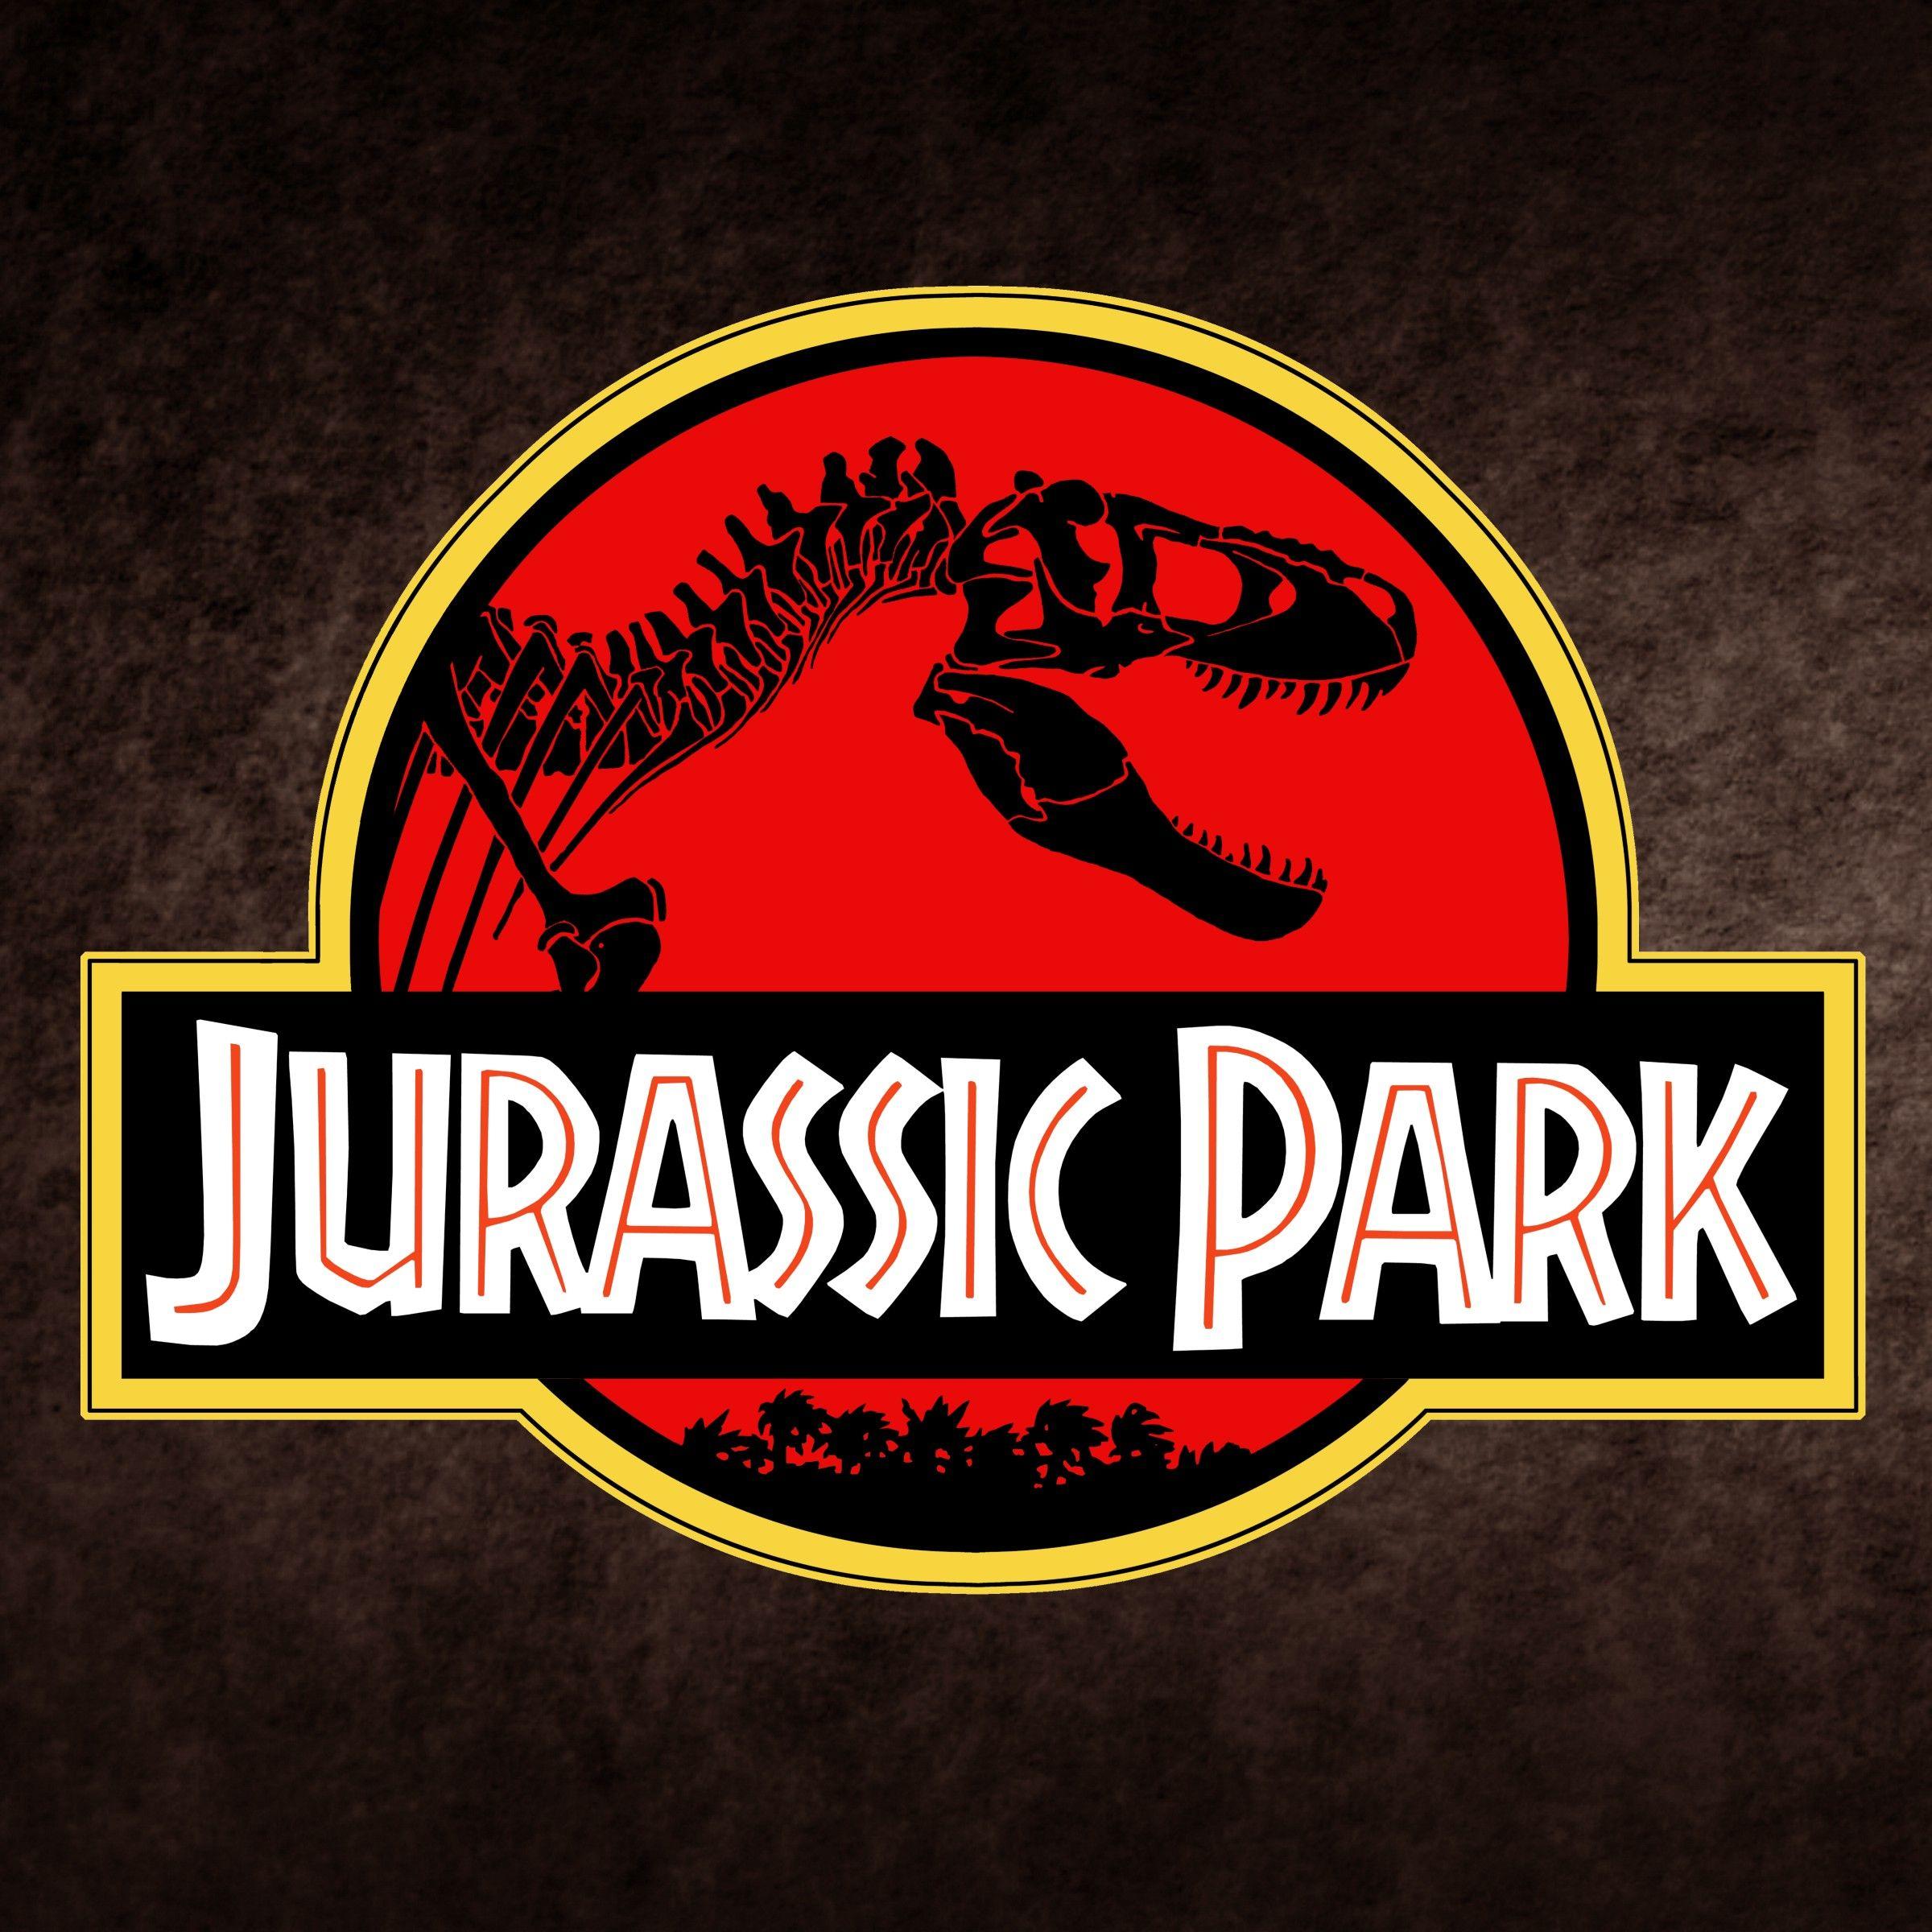 Jurassic Park Logo - Let's Talk about Jurassic Park: Part 1